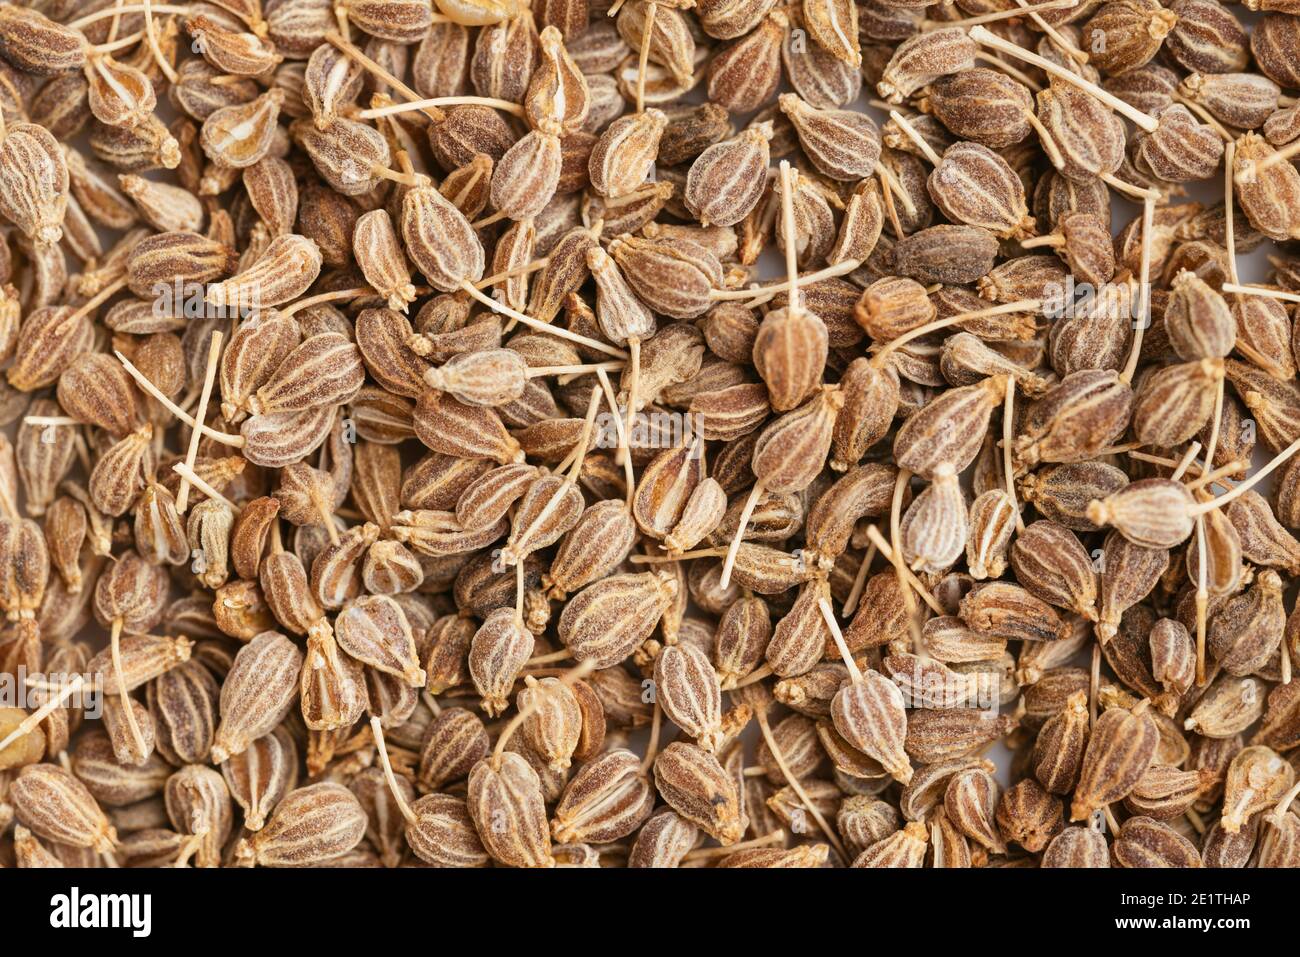 Close-up of anise seeds (Pimpinella anisum) Stock Photo